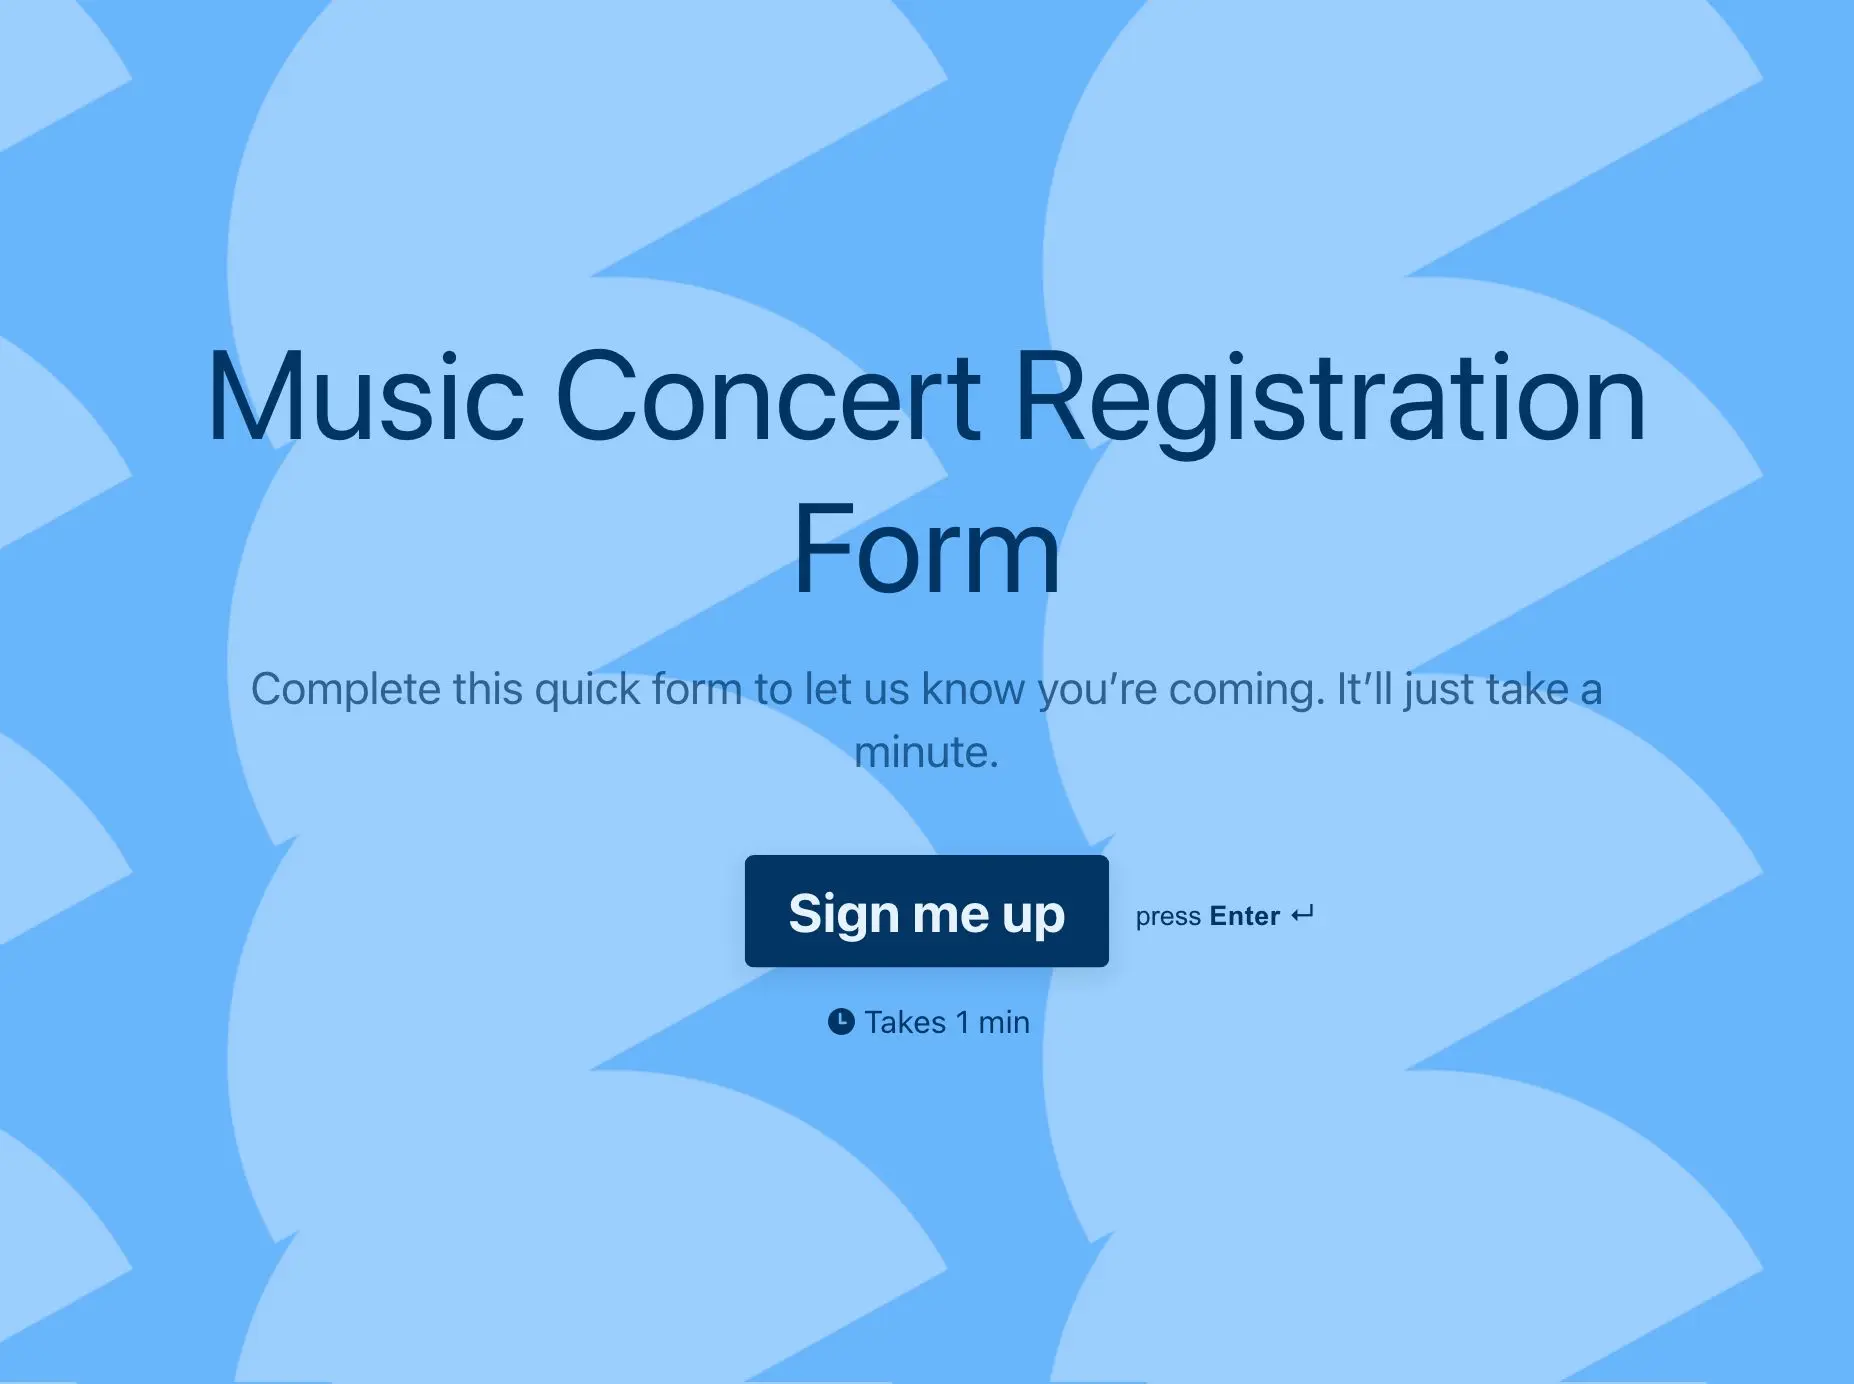 Music Concert Registration Form Template Hero